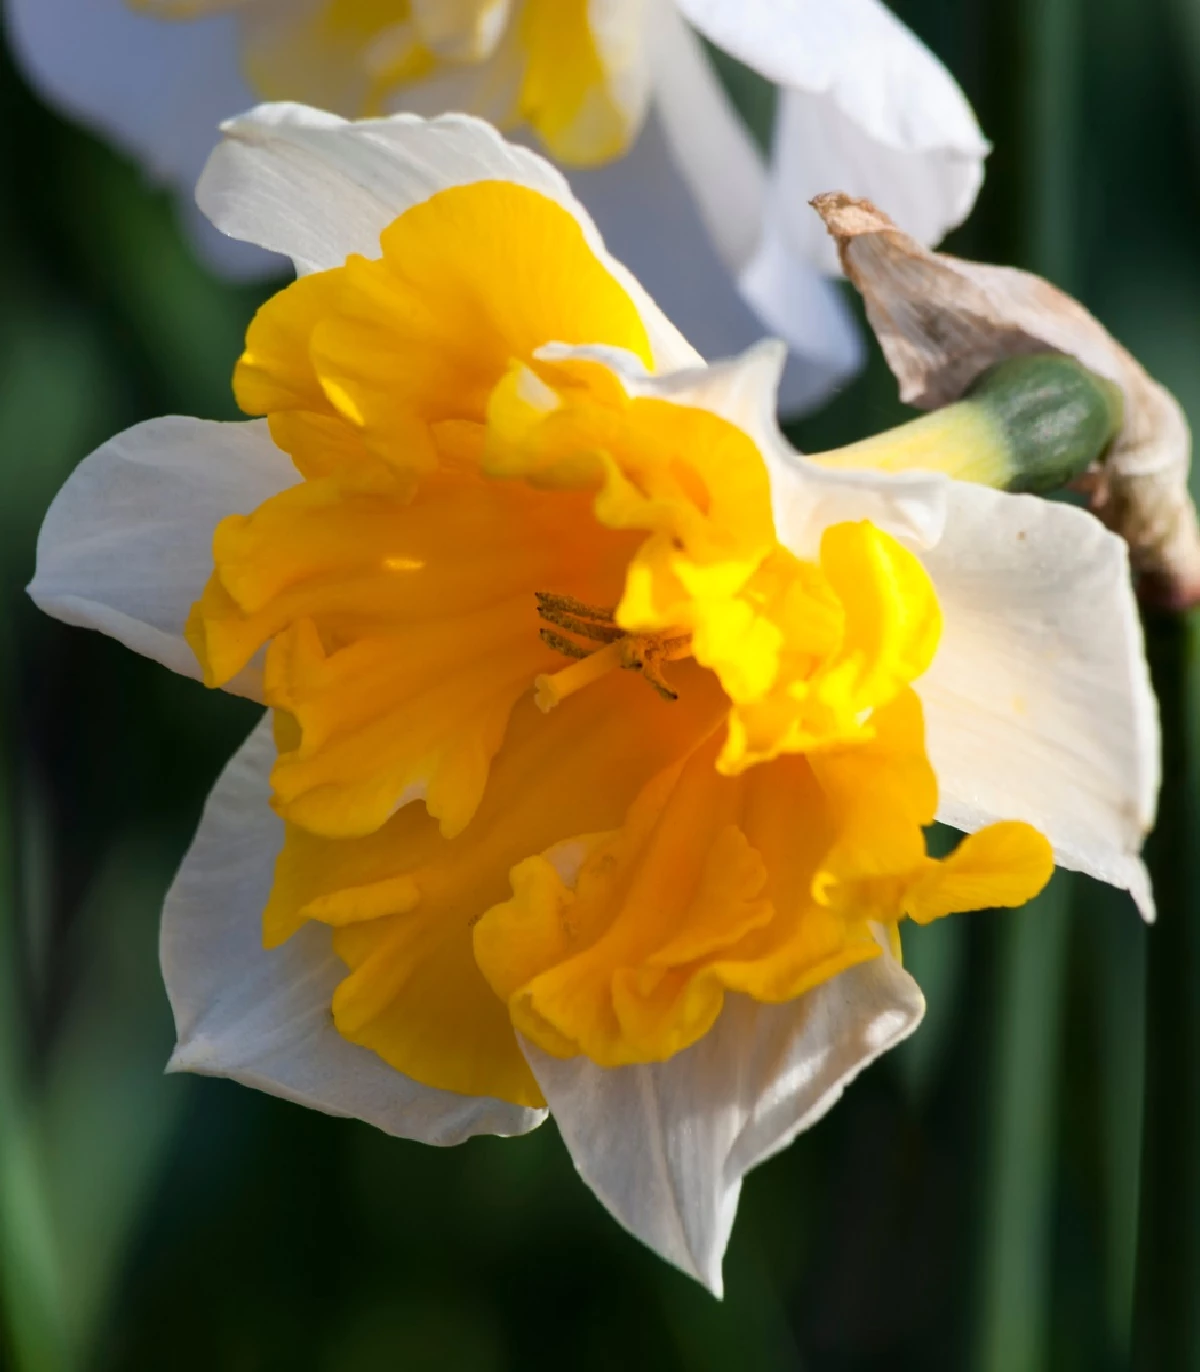 narcis Orangery - Narcissus Orangery